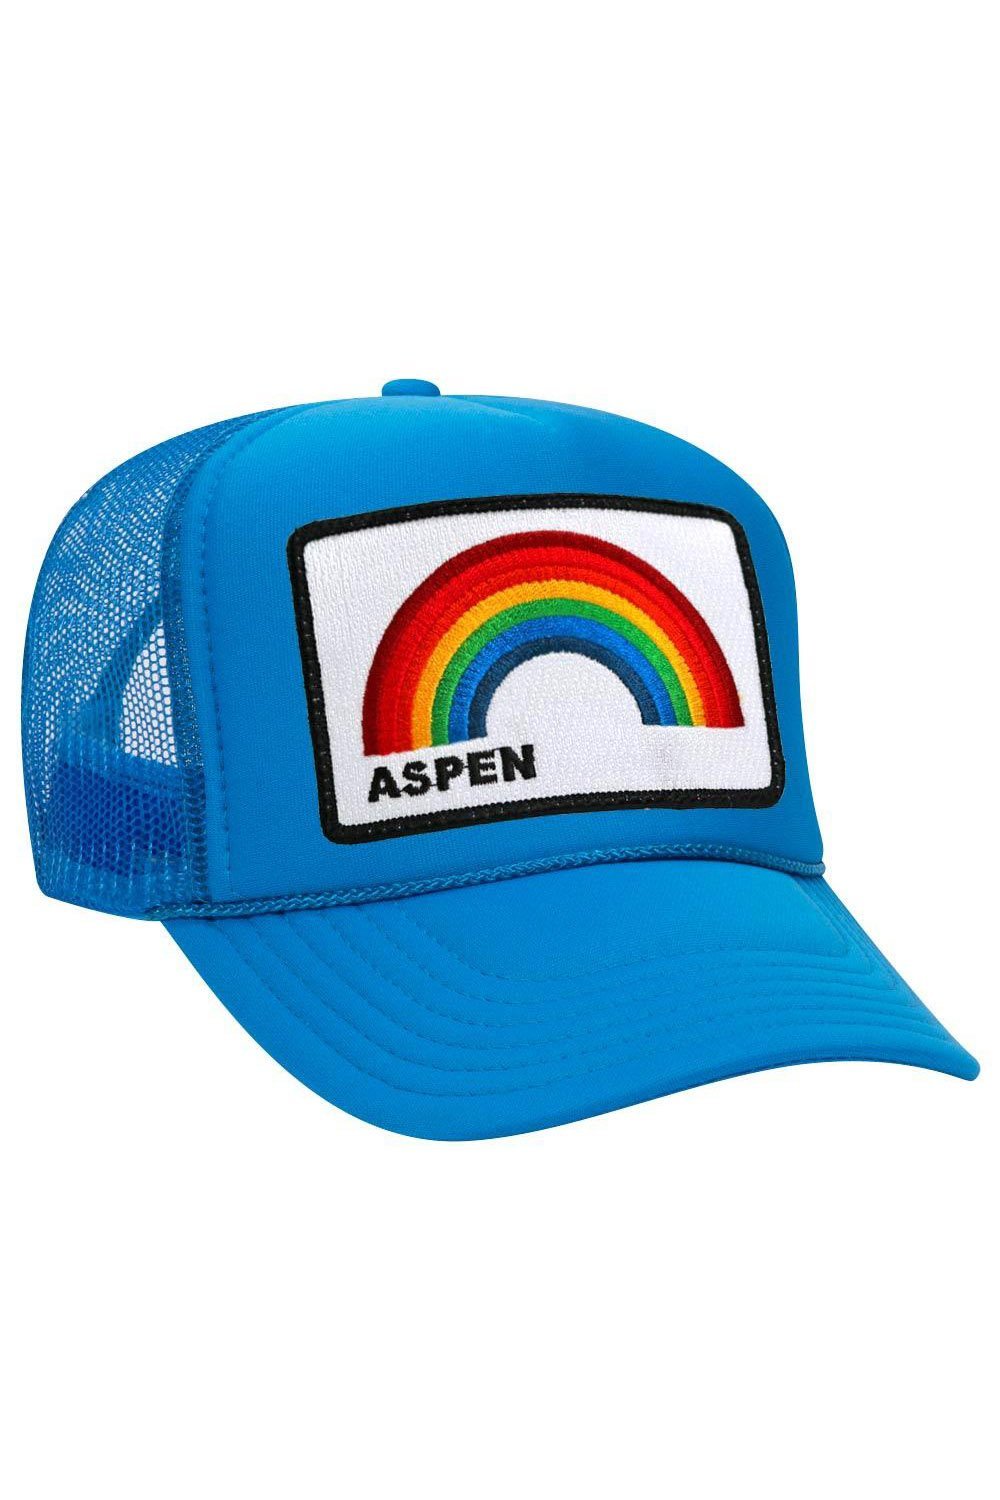 ASPEN RAINBOW TRUCKER HAT HATS Aviator Nation OS LIGHT BLUE 